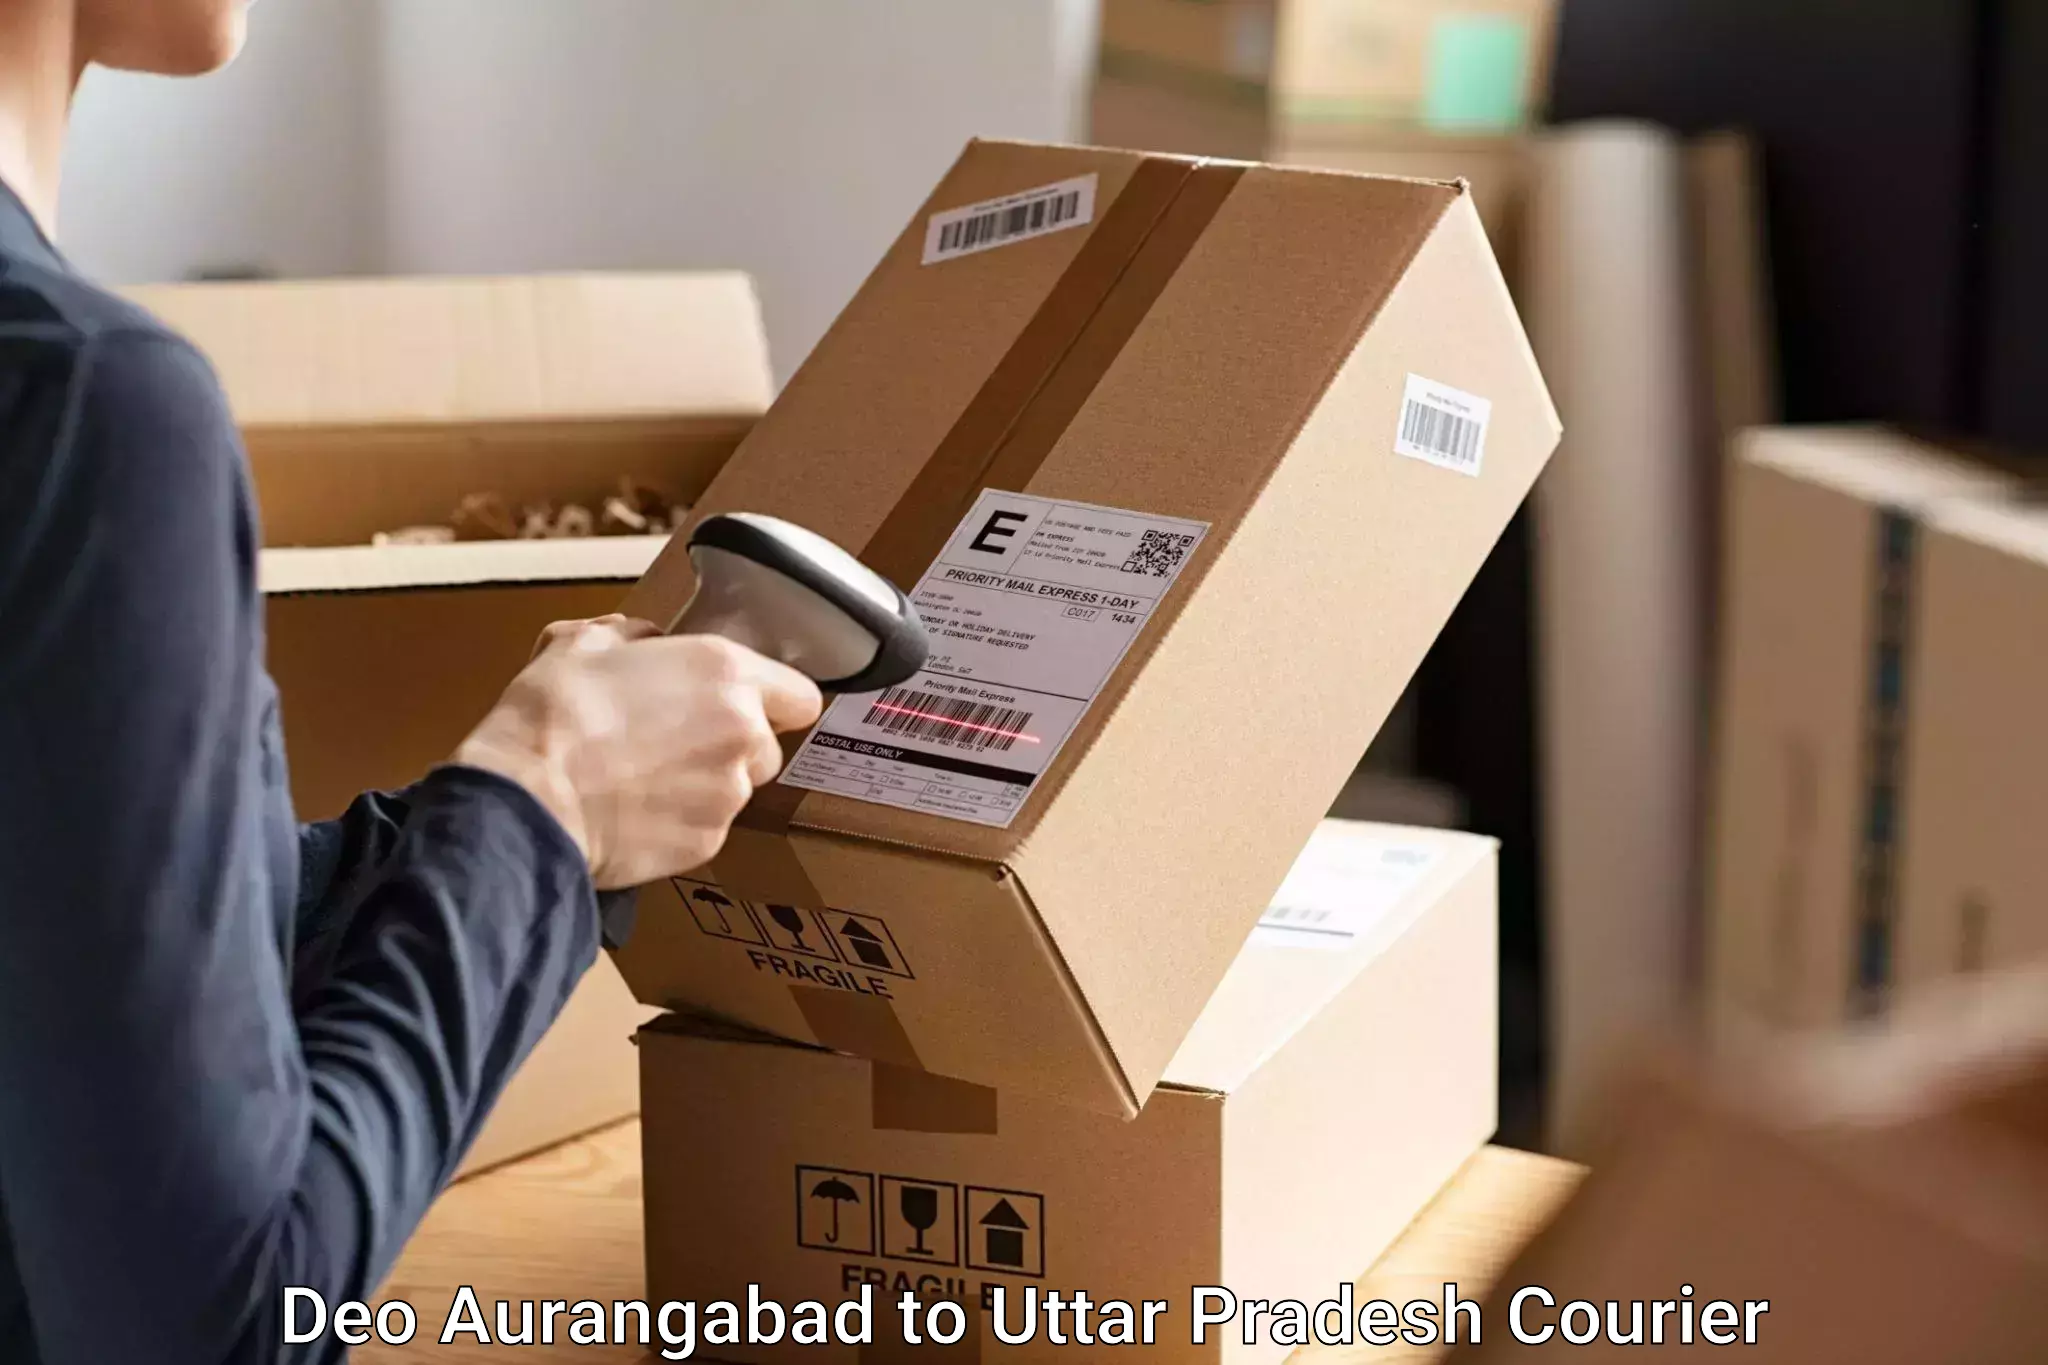 Baggage relocation service Deo Aurangabad to Behat